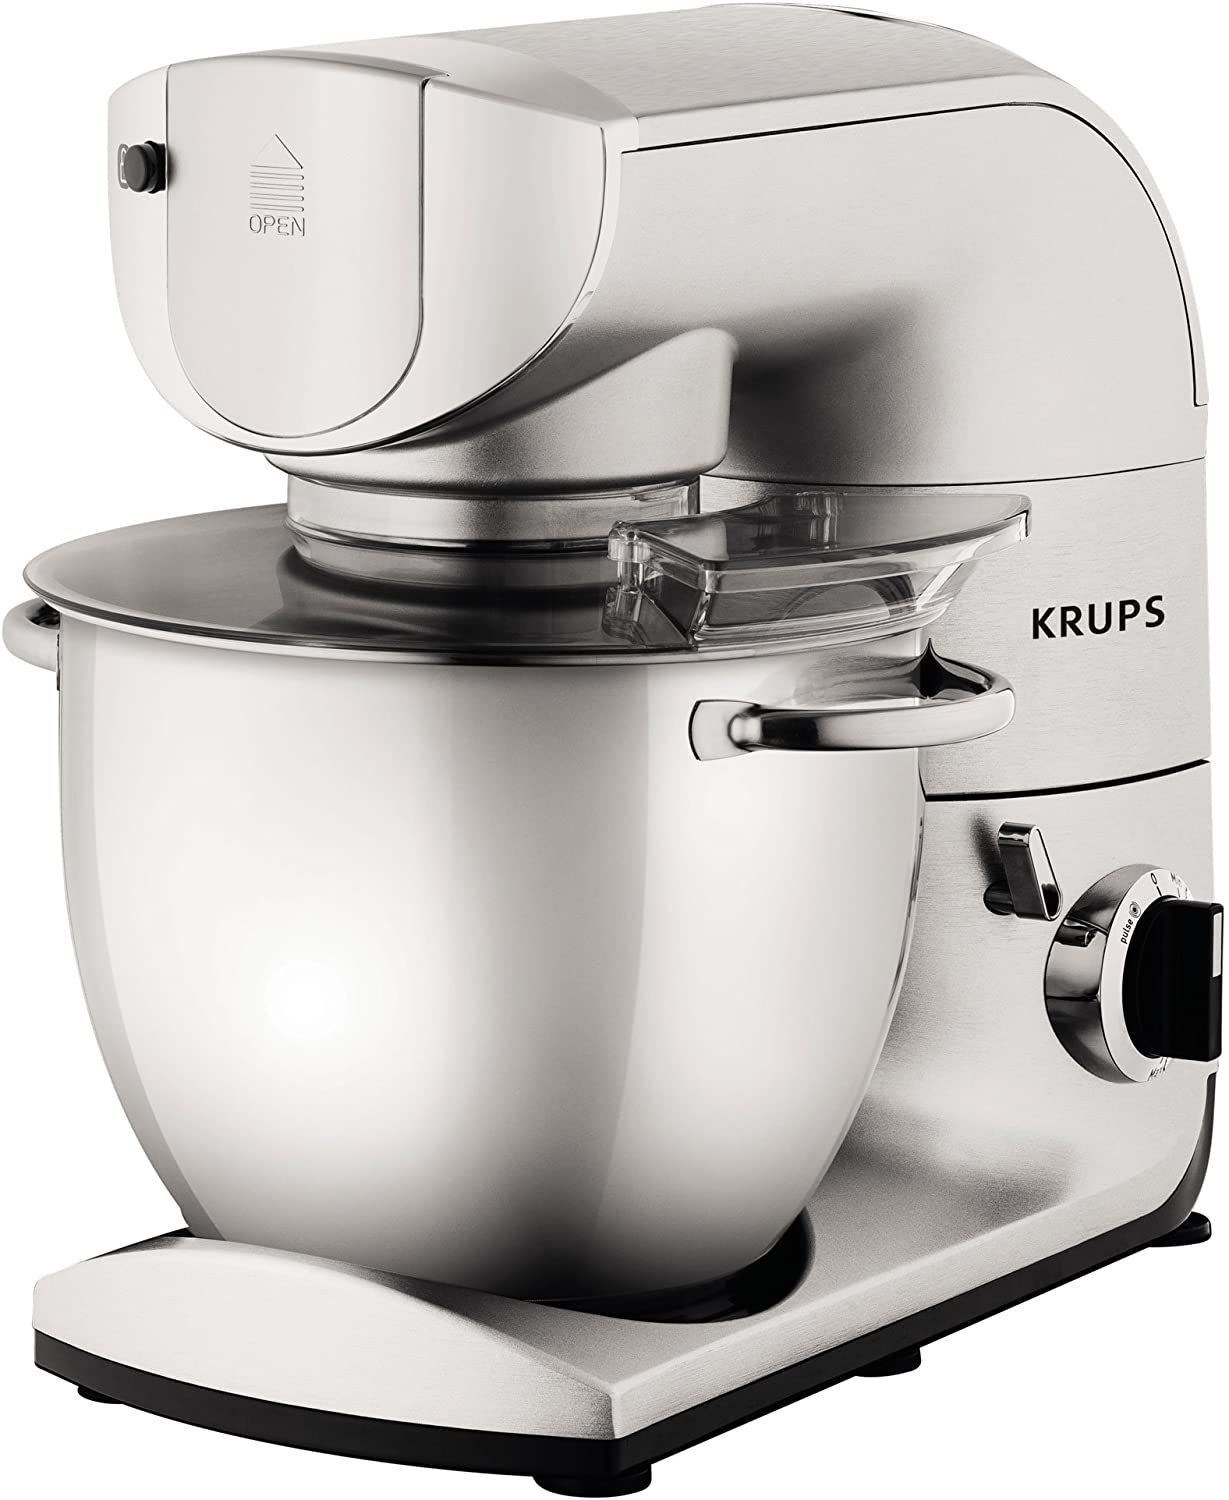 Krups KA402D Kitchen Machine, 5.5 Litre, 1200 Watt, With Accessories, Stainless Steel